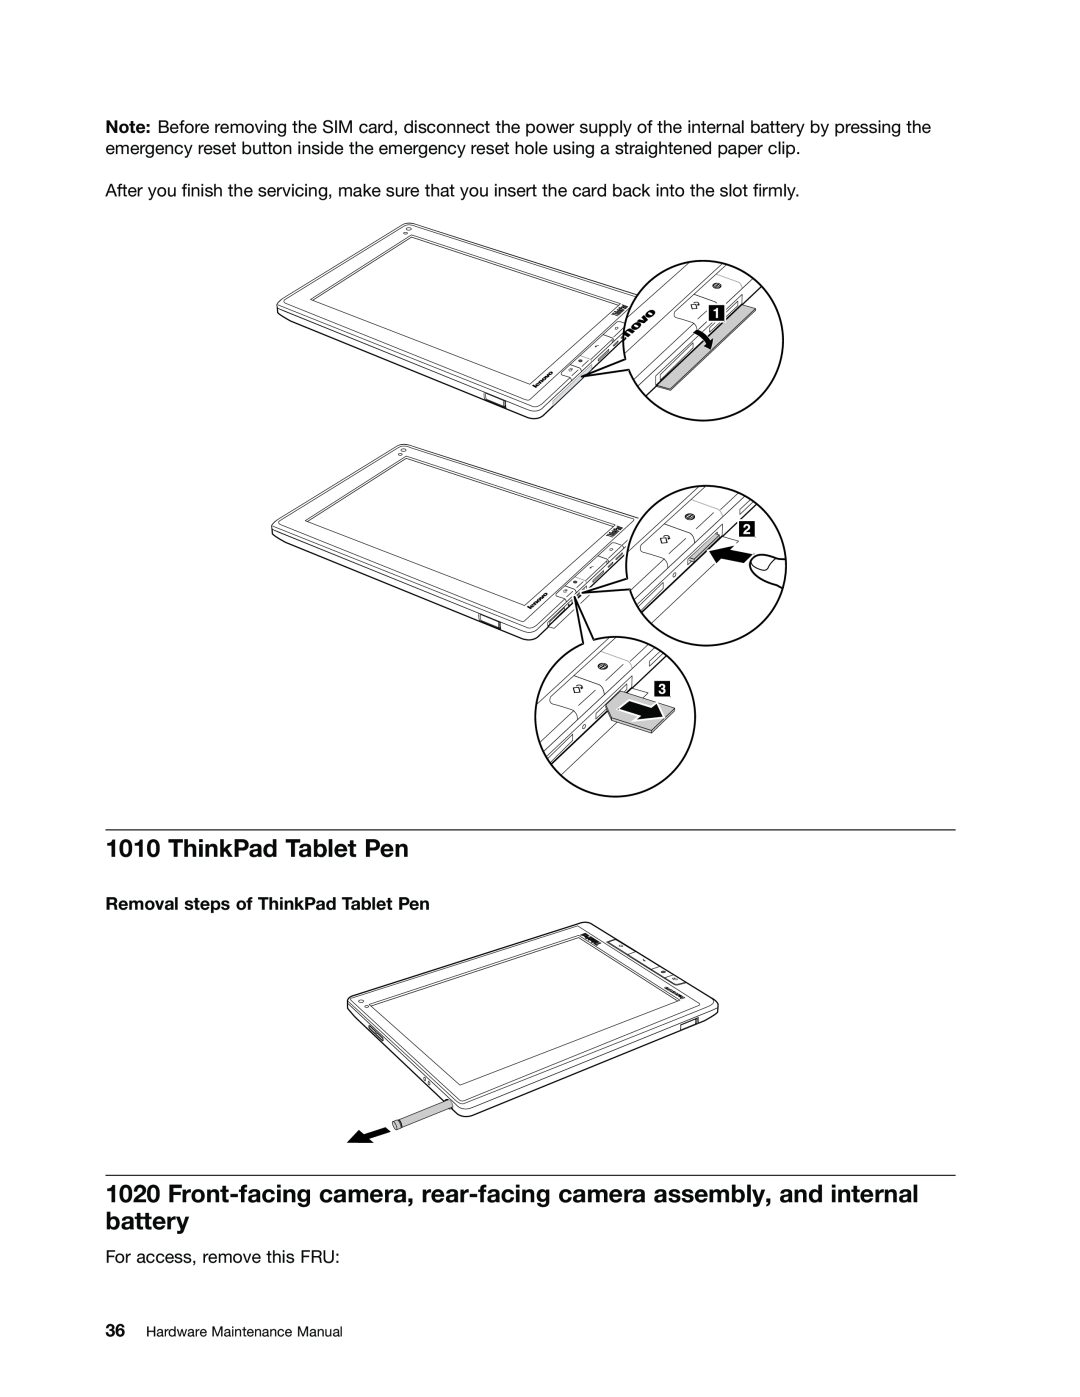 Lenovo 183825U, 183822U manual Removal steps of ThinkPad Tablet Pen 